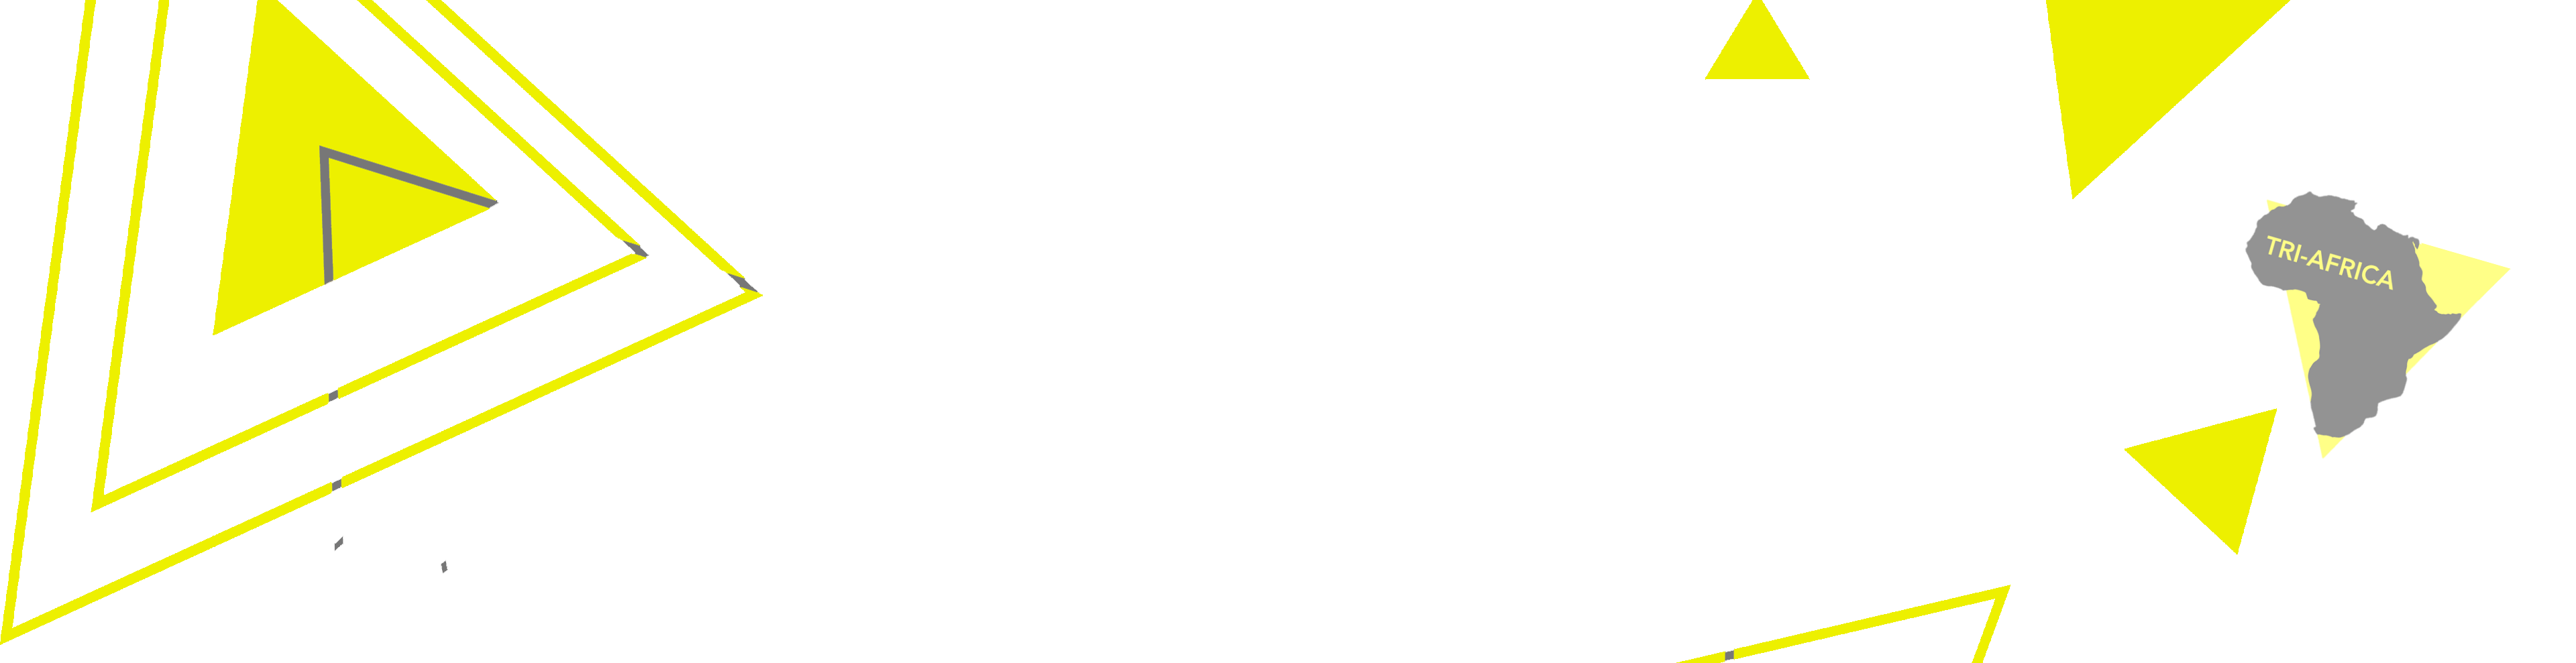 Kangol brand top image